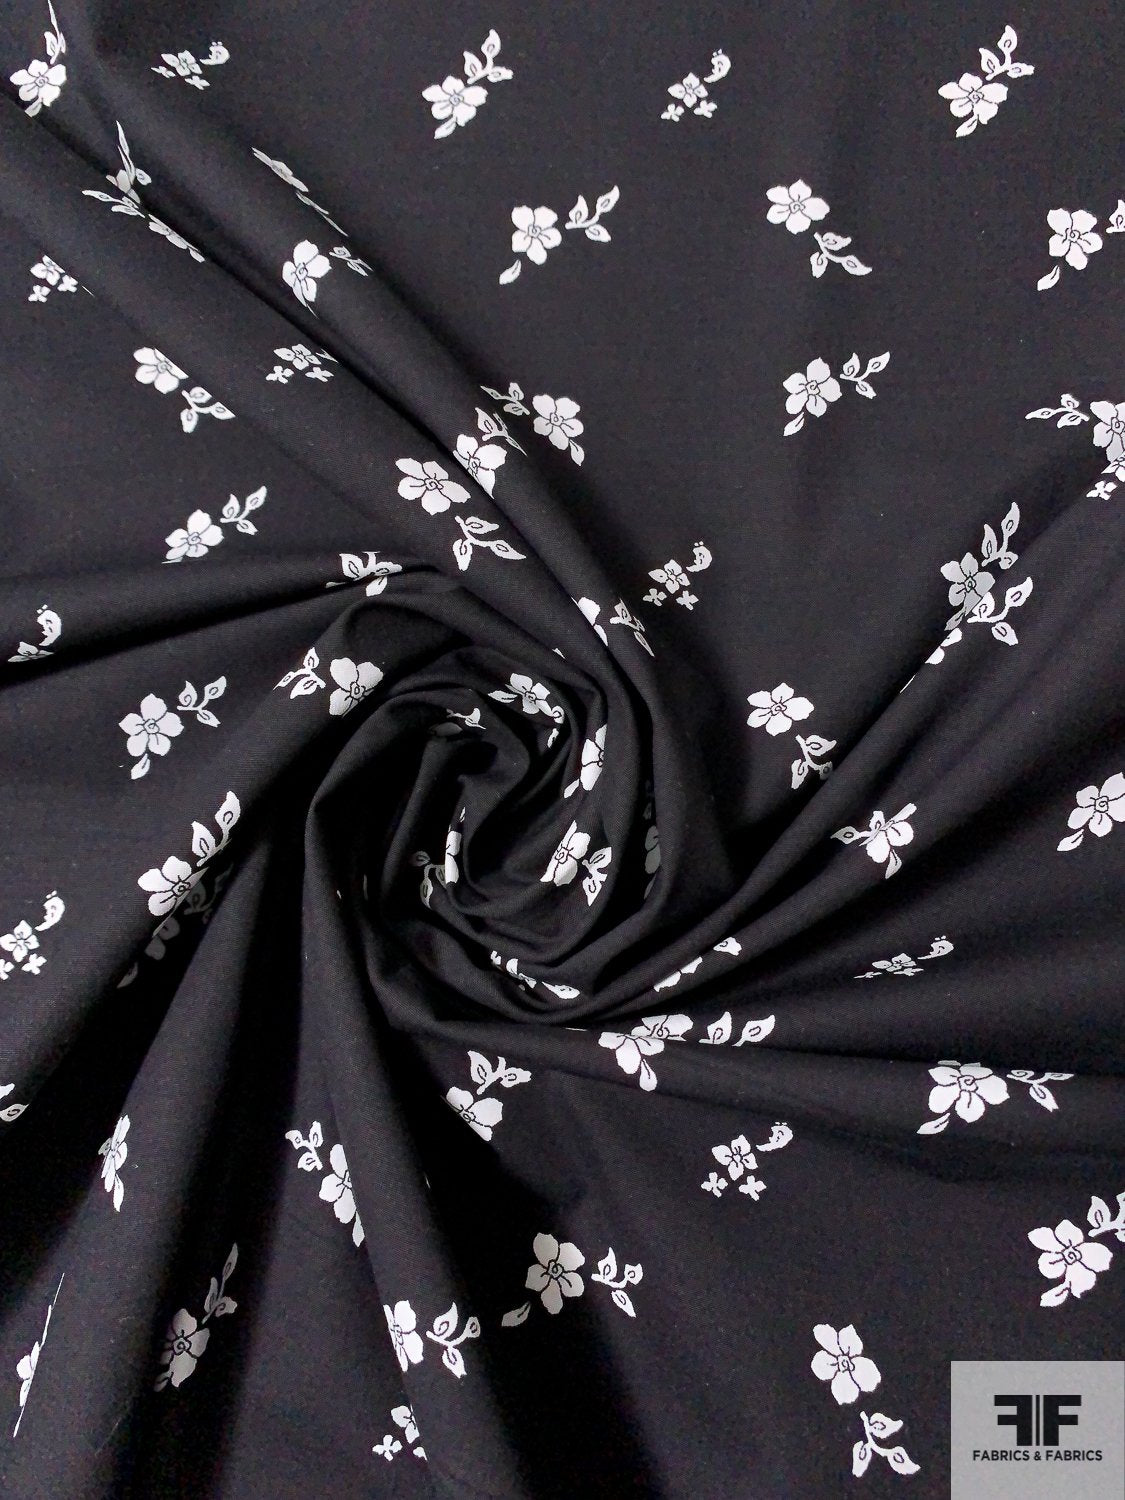 Ditsy Floral Printed Stretch Cotton Poplin - Black/White